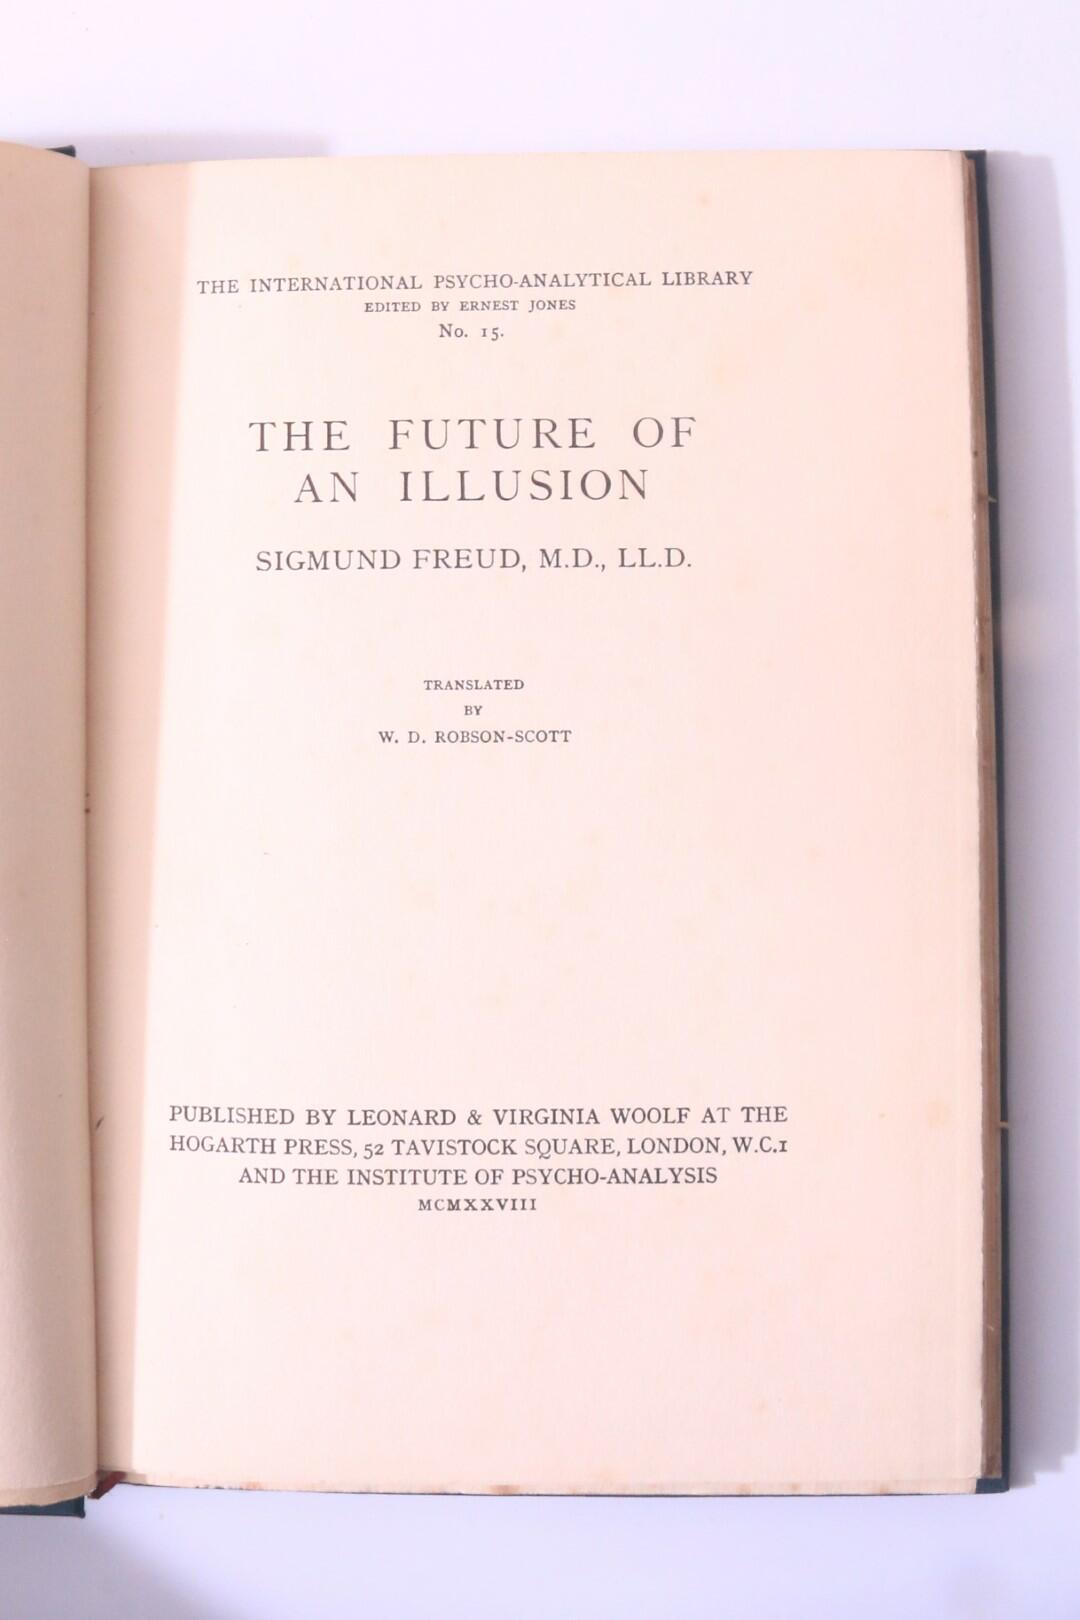 Sigmund Freud - The Future of an Illusion - Olaf Stapledon's Copy - Hogarth Press, 1928, First Edition.